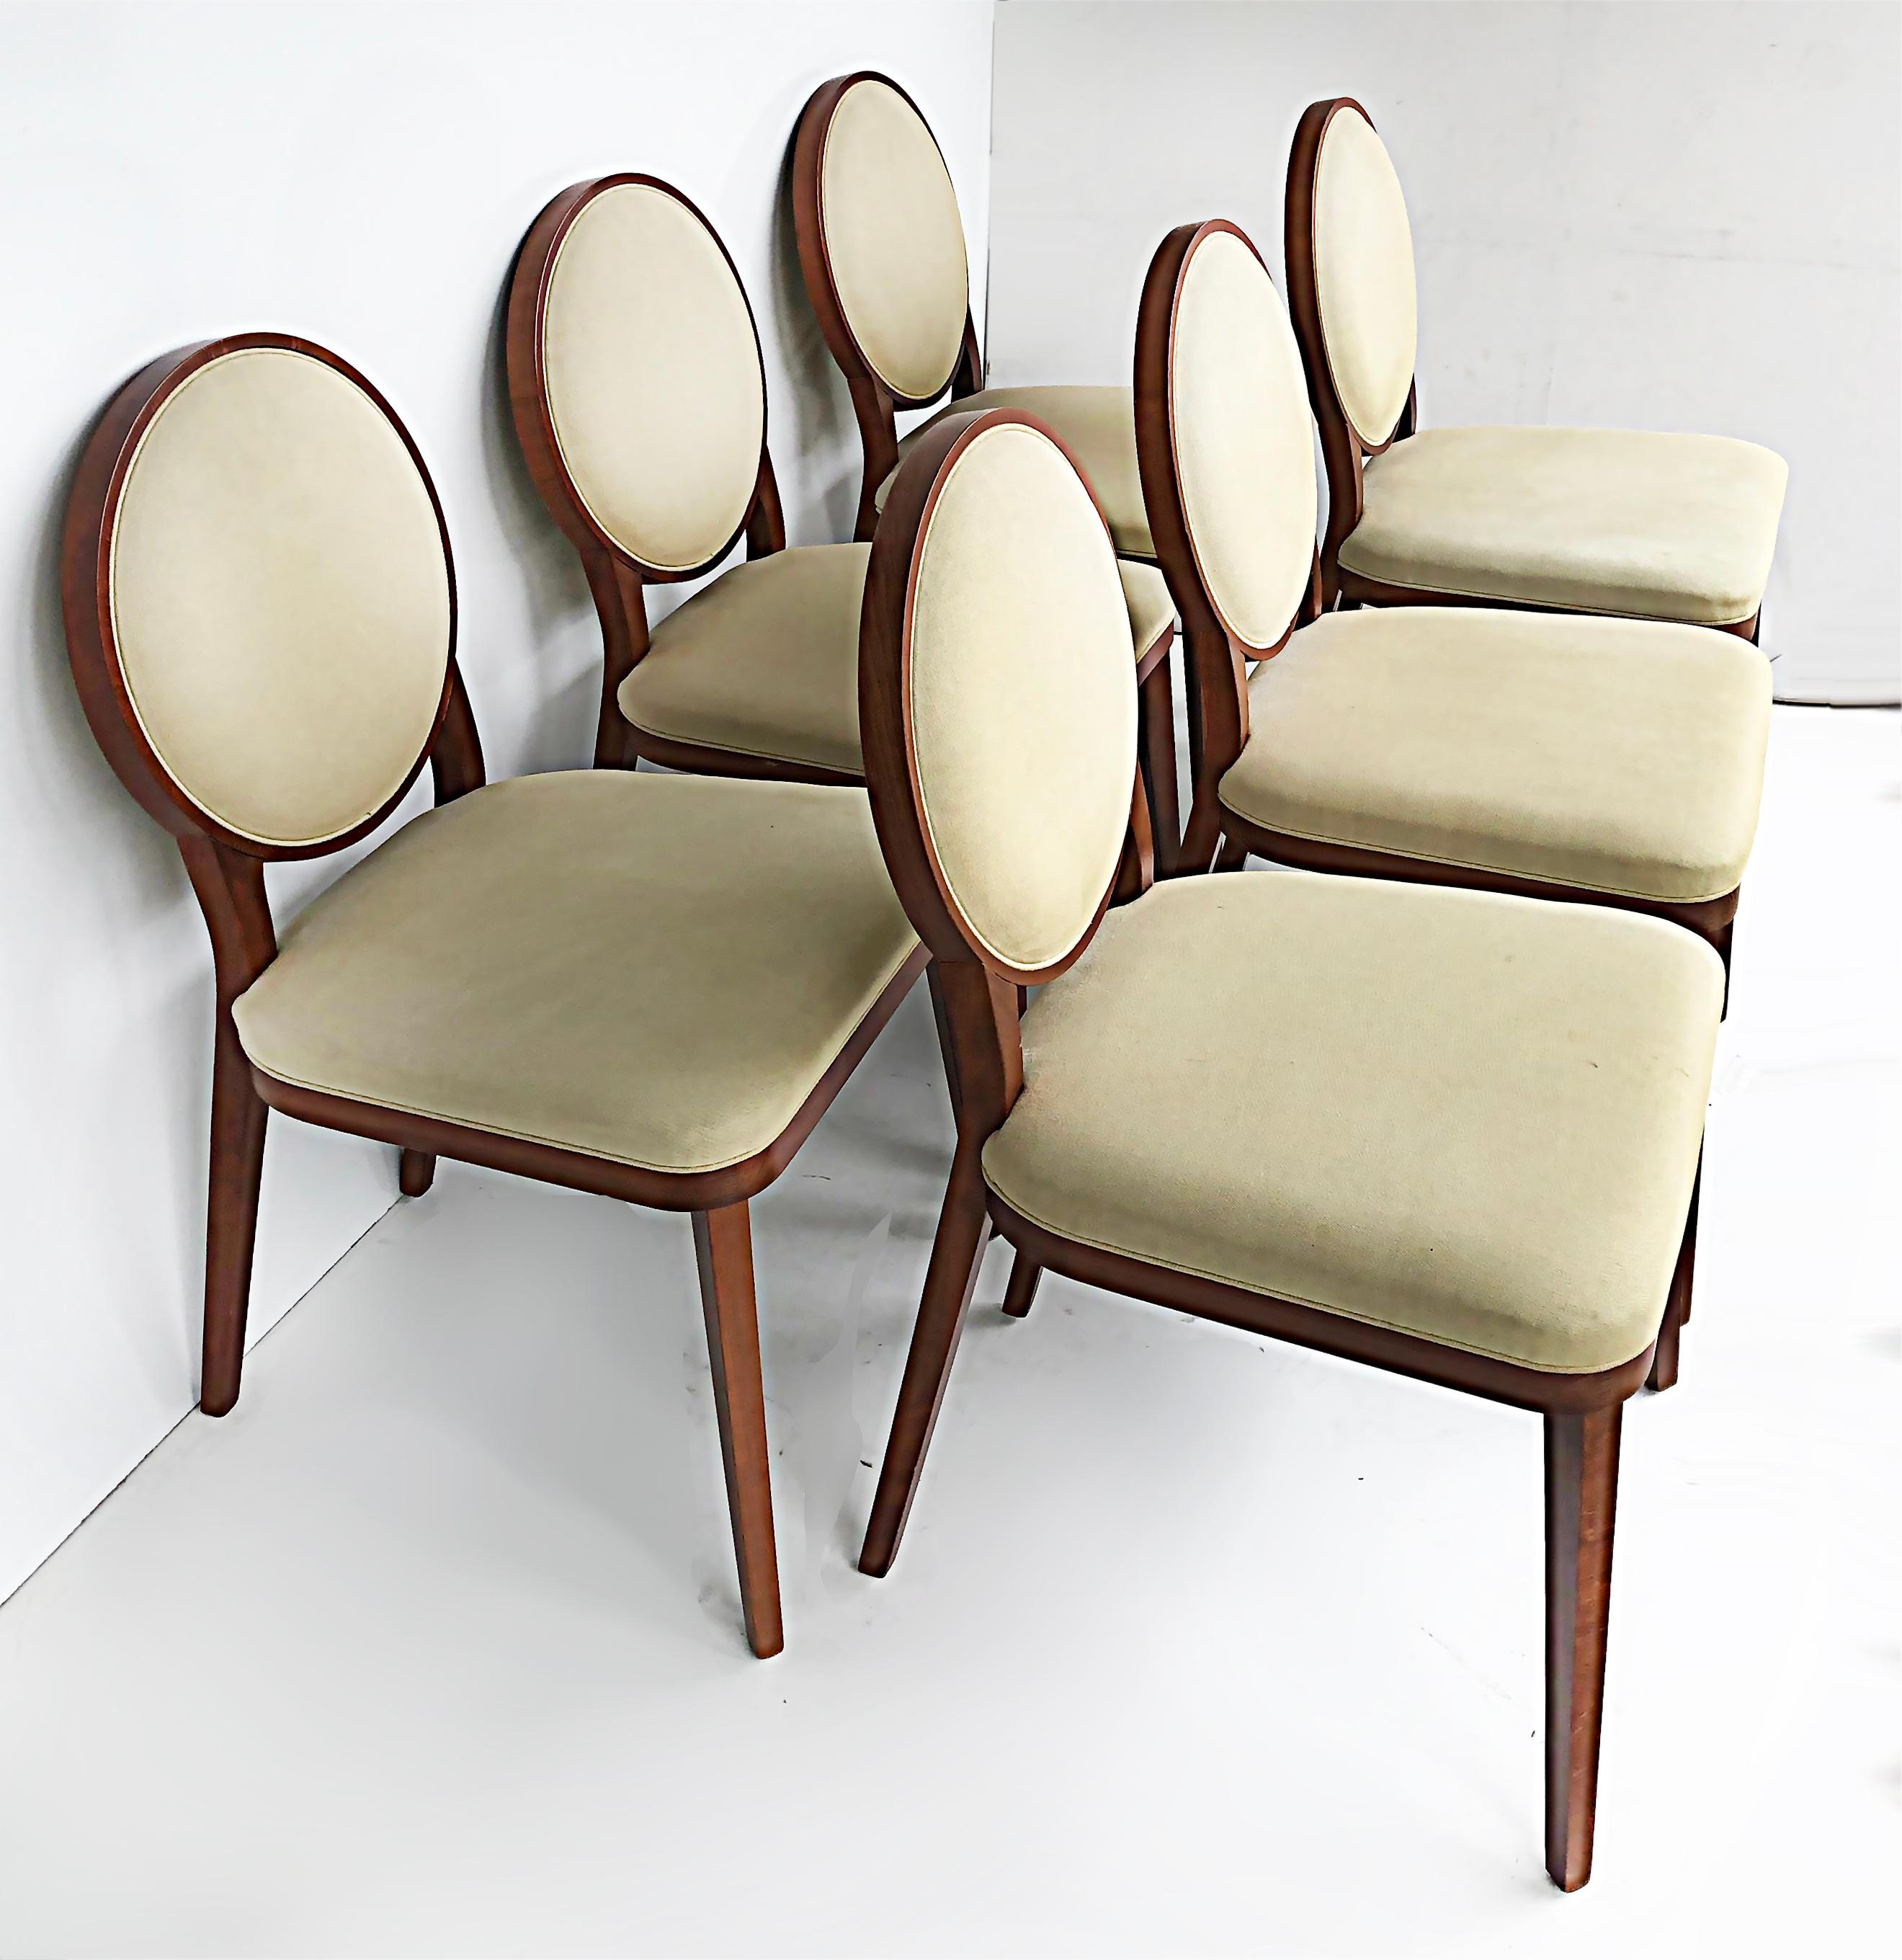 Italian Bross Studio Riforma Italy Art Deco Style Beech Wood Chairs, Set of 6